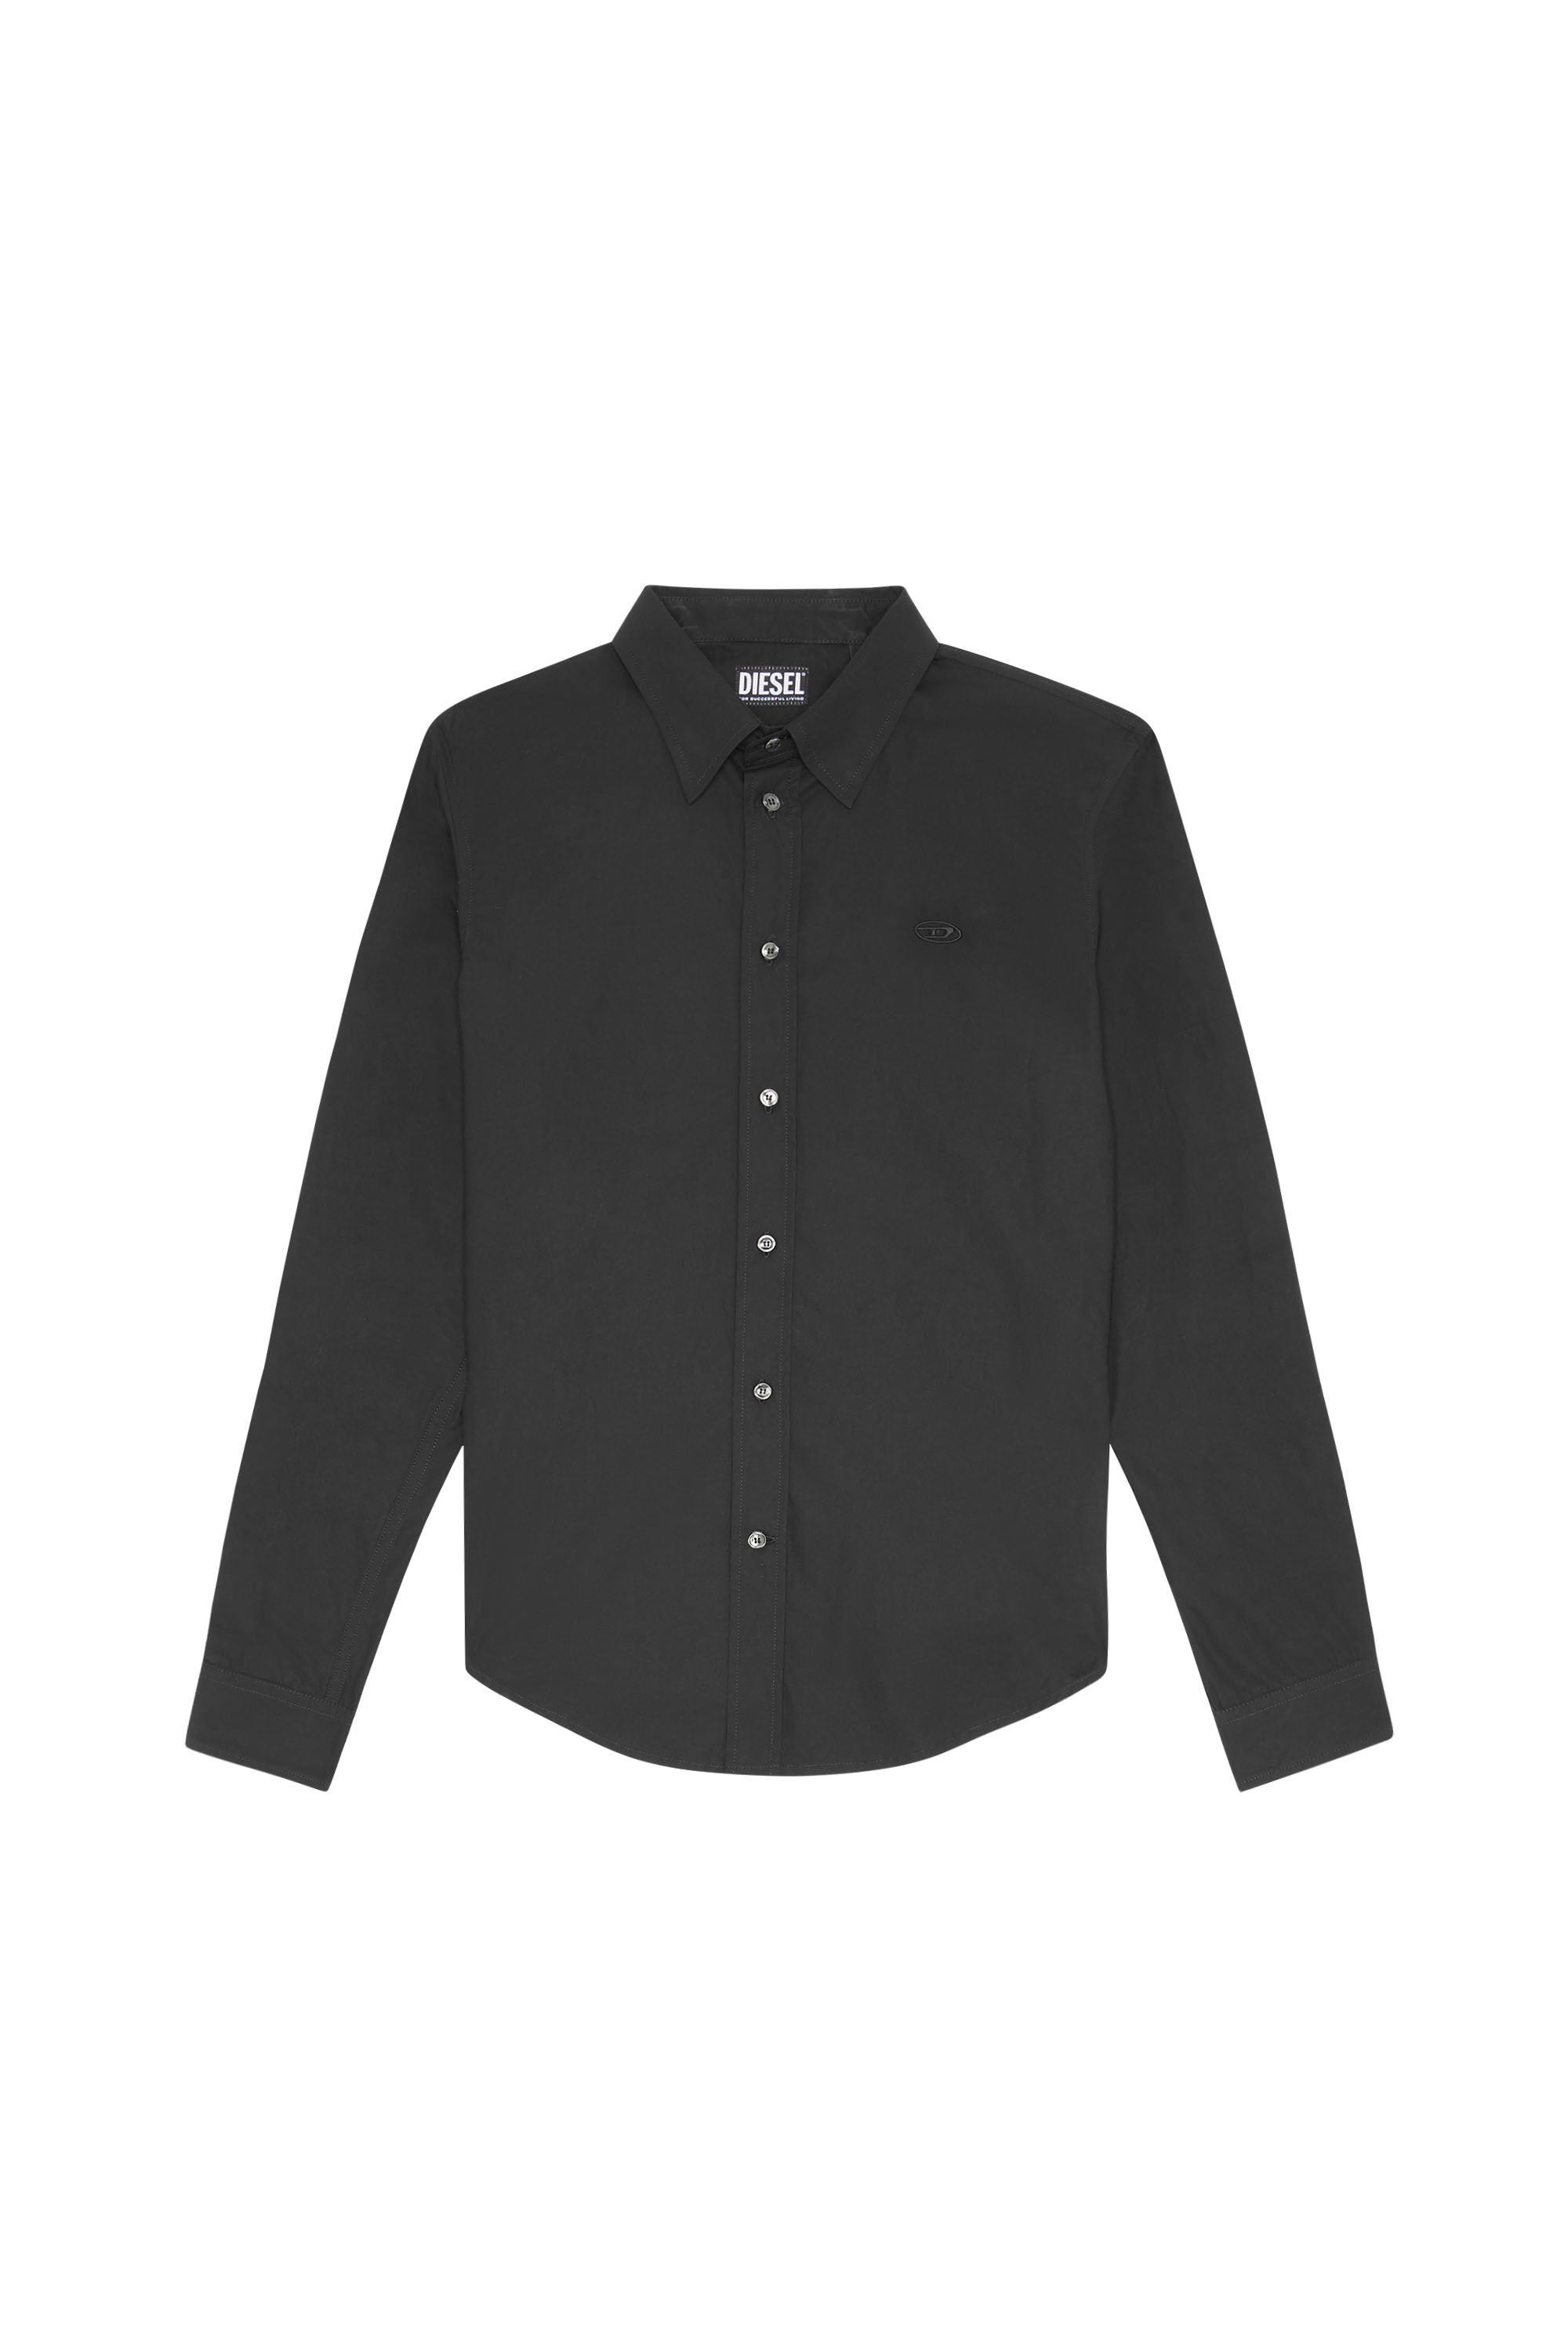 Diesel - S-BEN-CL, Man Shirt in technical cotton in Black - Image 2